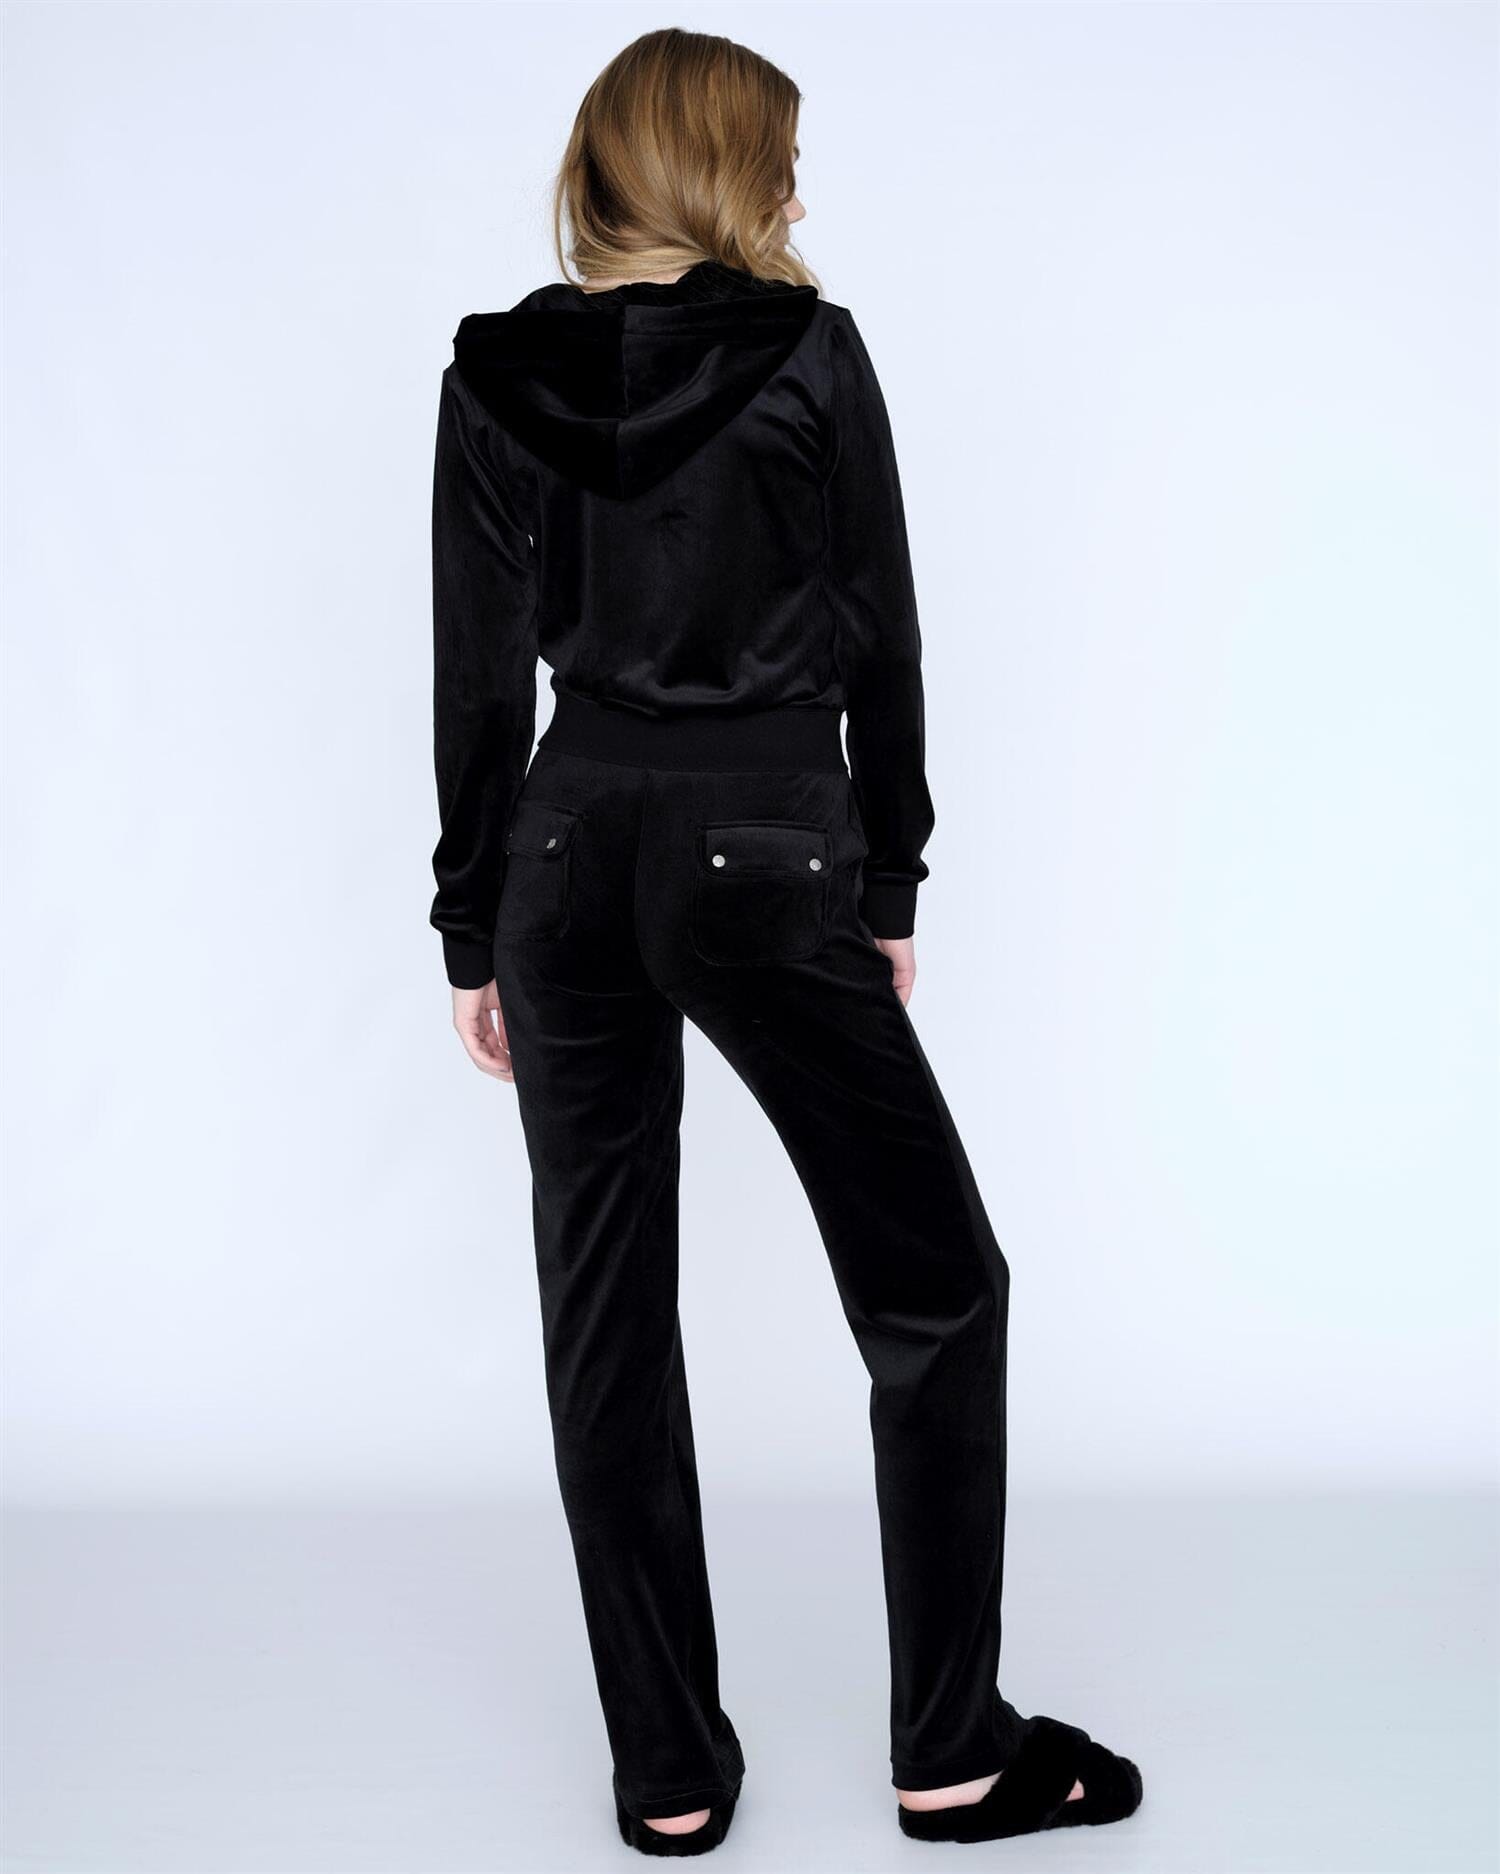 Juicy Couture Del Ray Classic Velour Pant Pocket Design Black Bukse